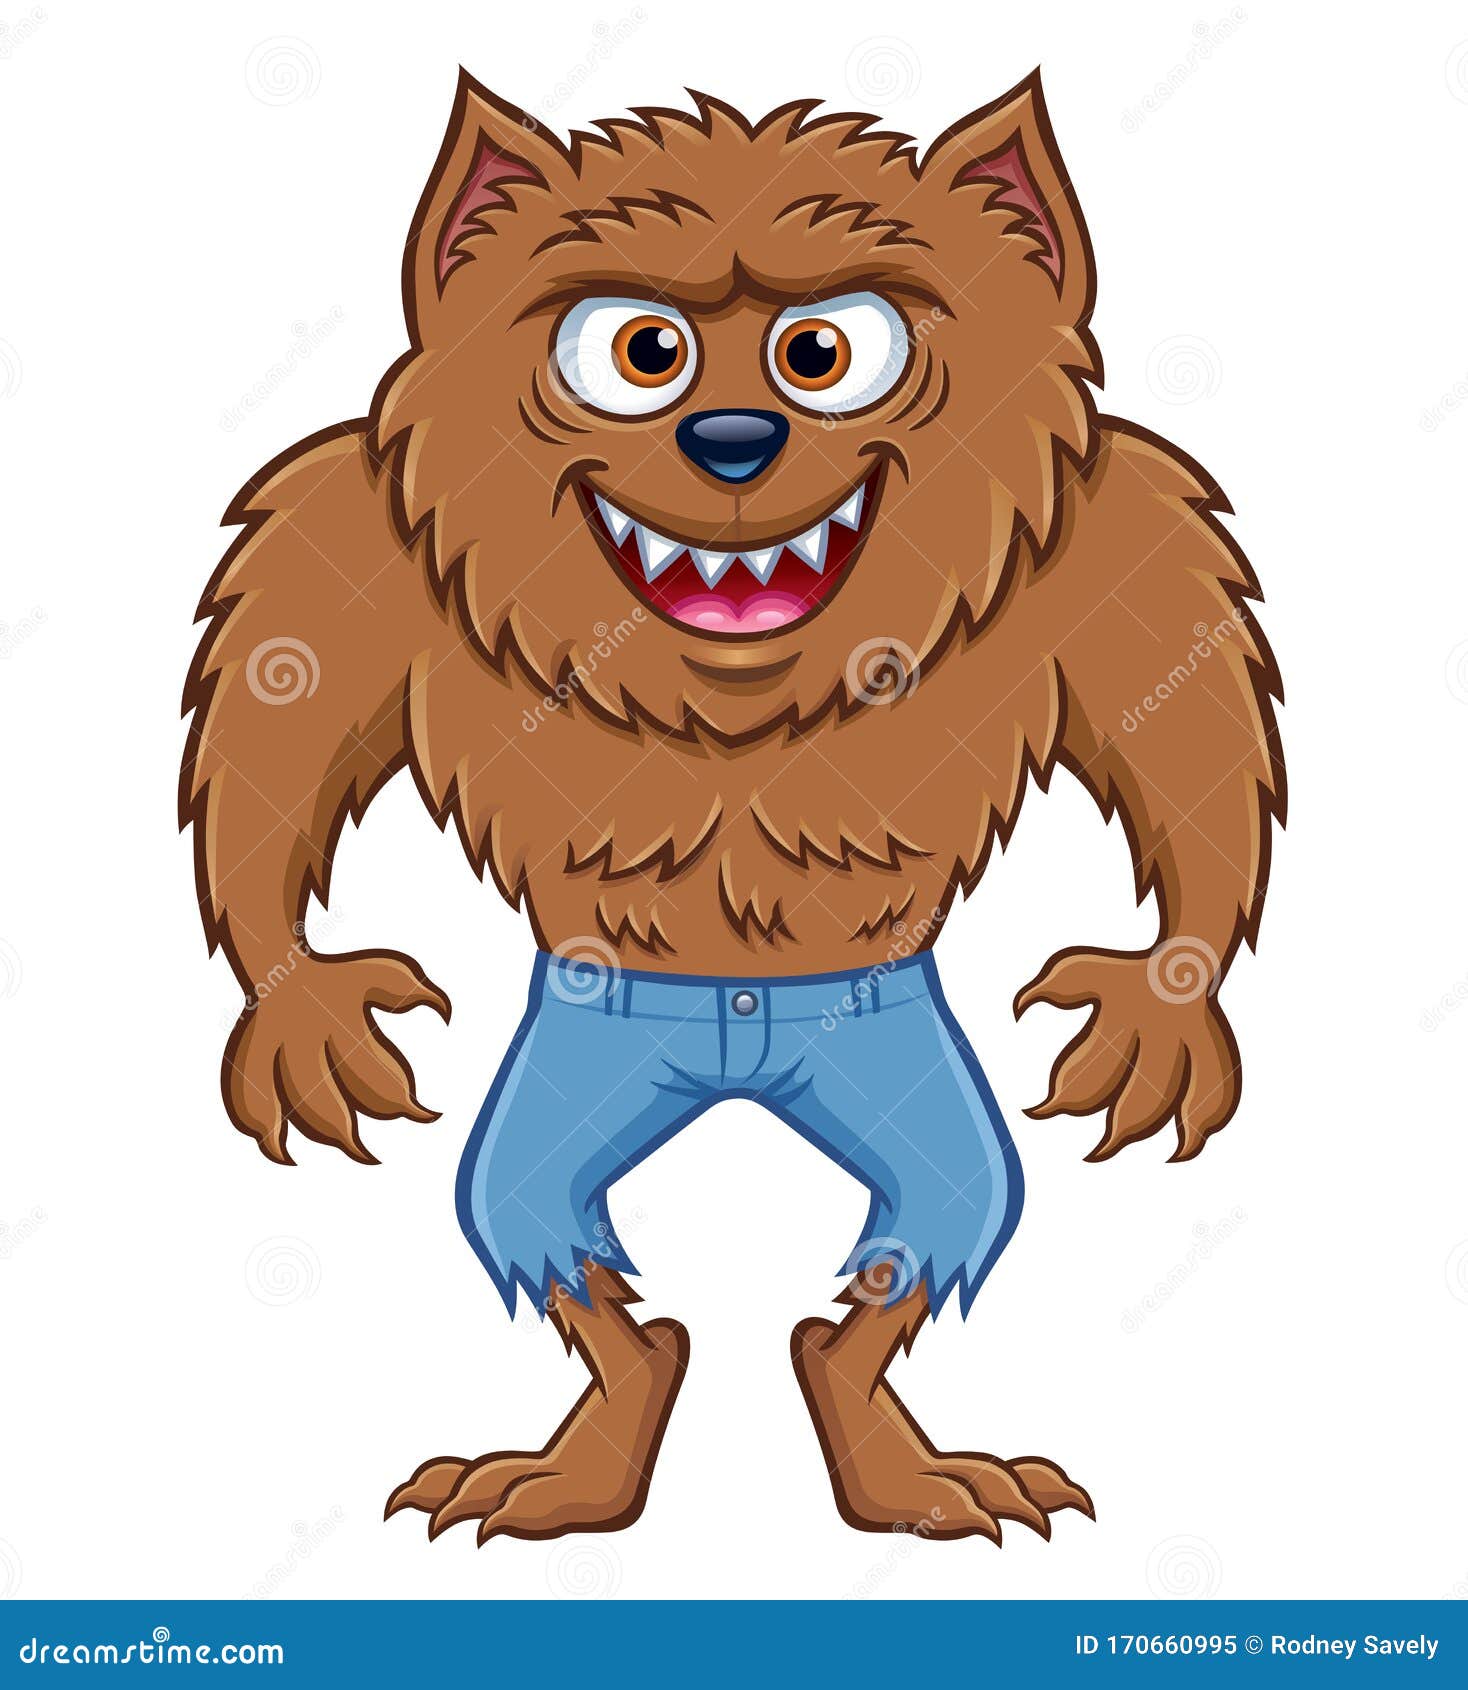 werewolf character grinning wildly